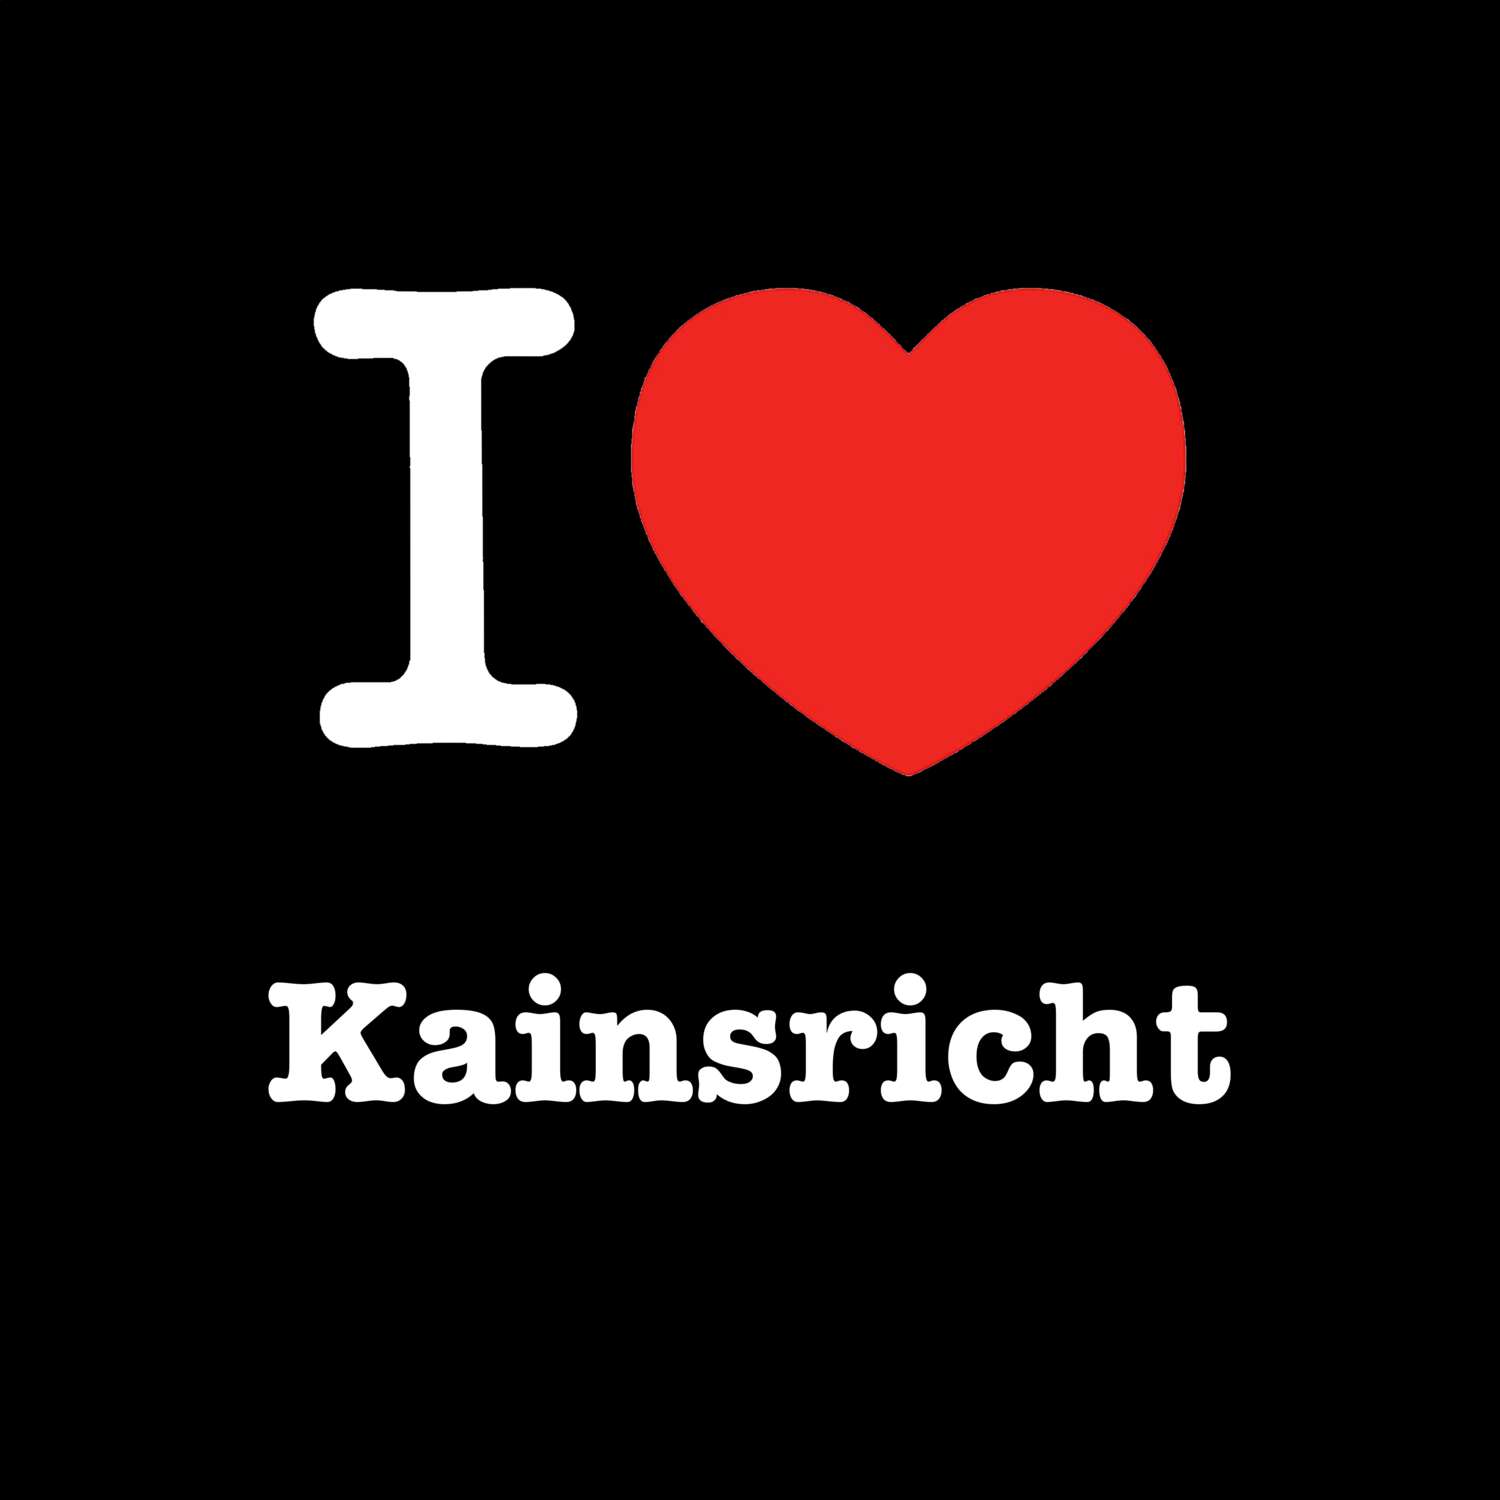 Kainsricht T-Shirt »I love«